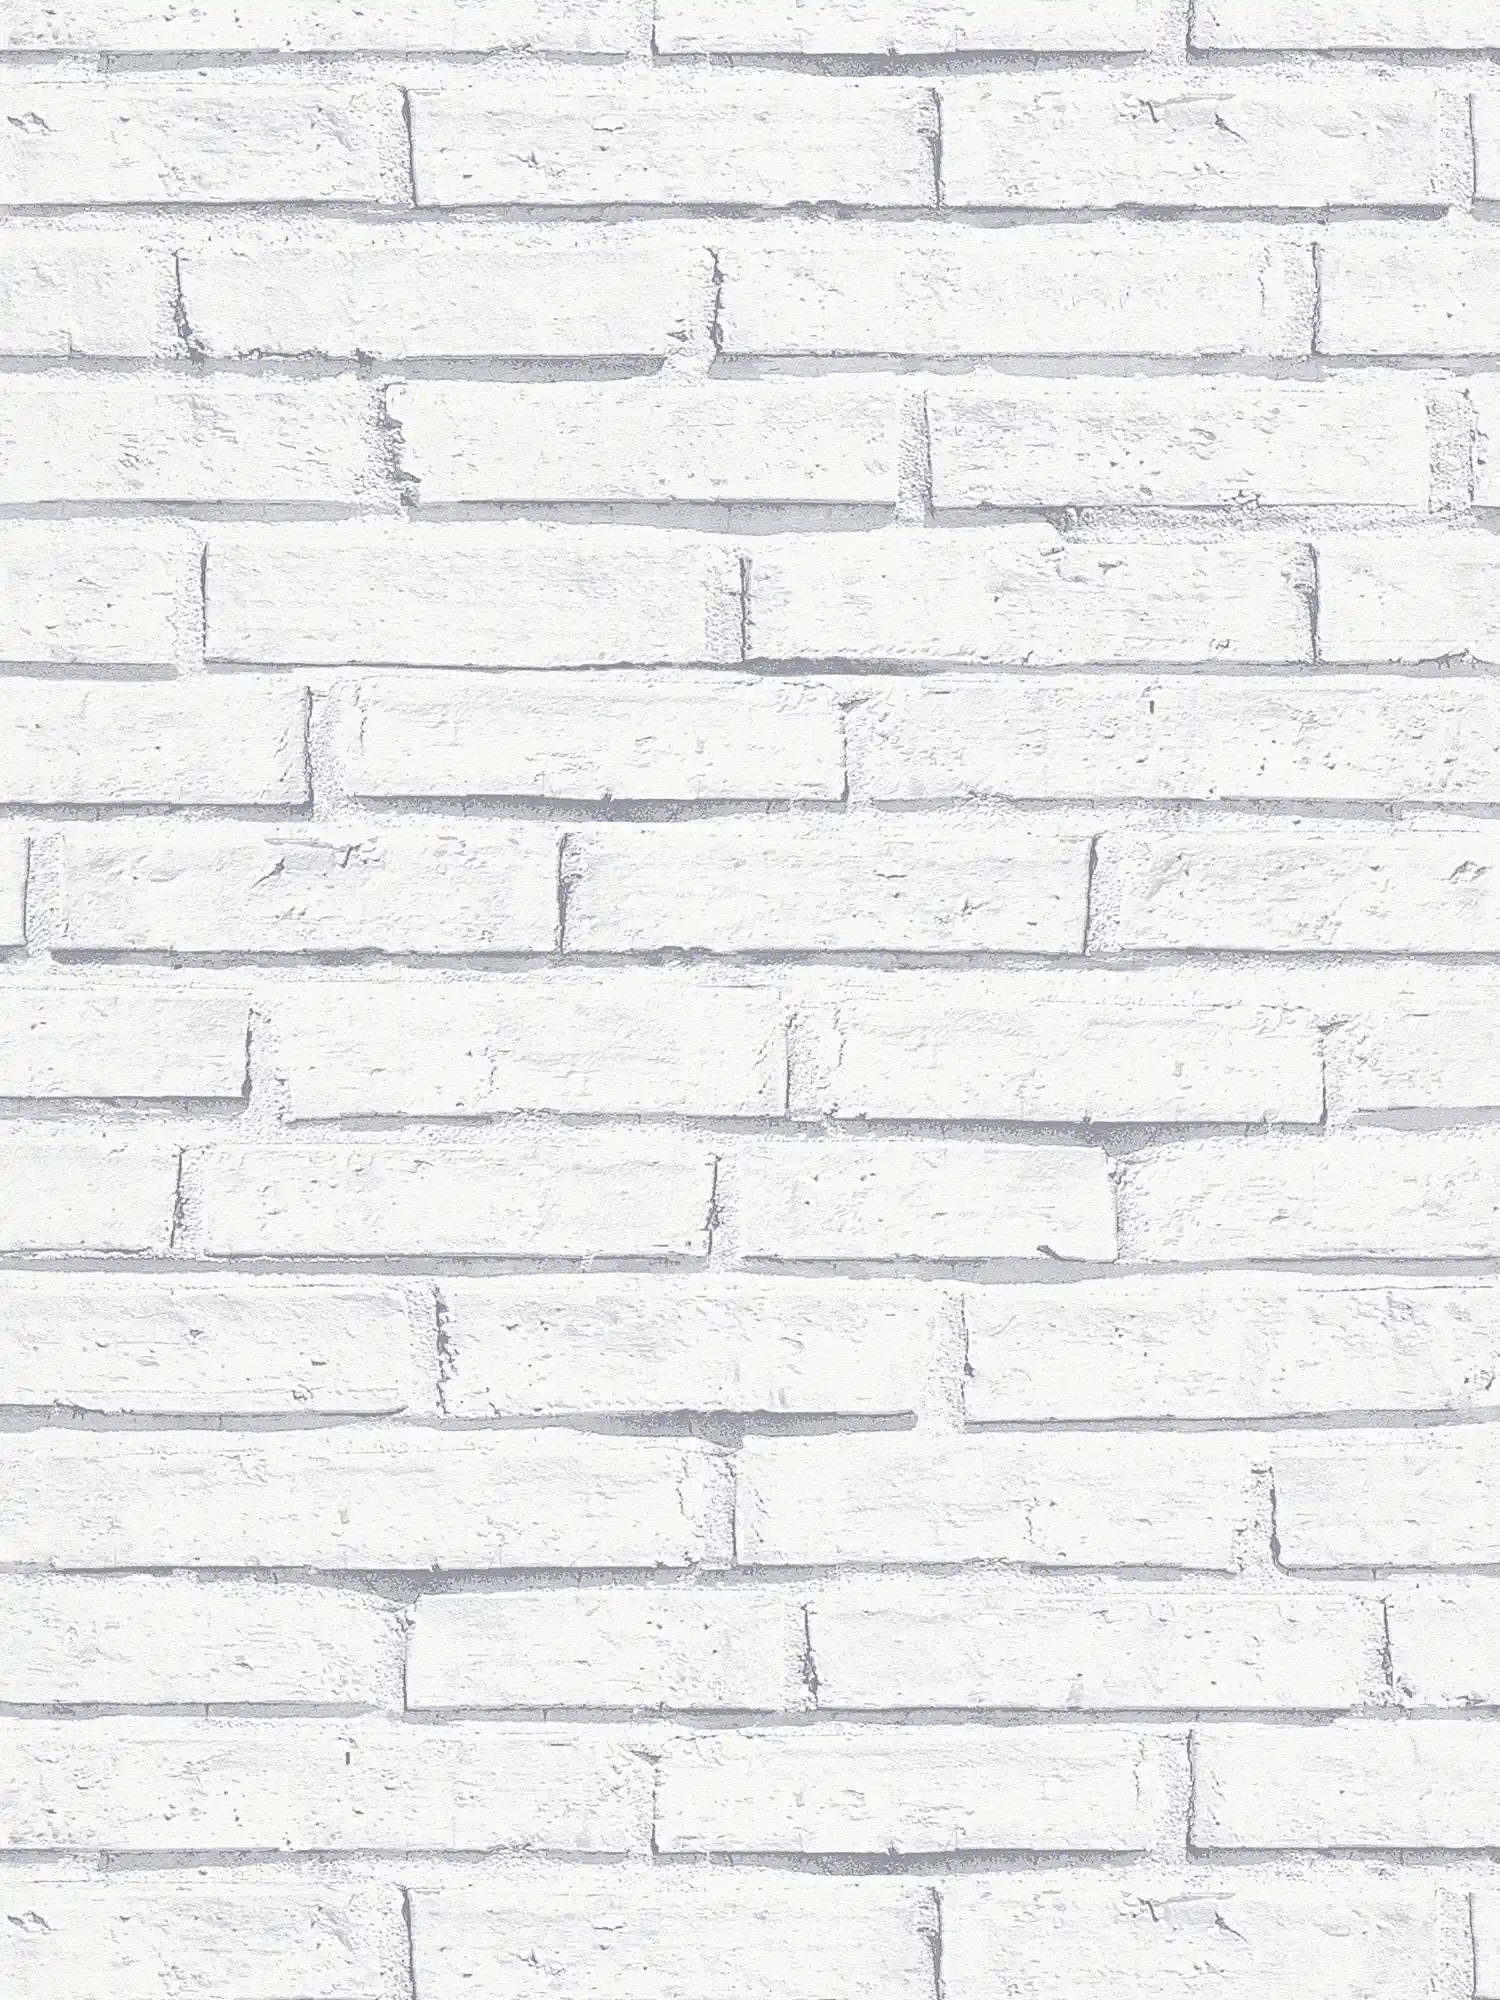         Masonry wallpaper 3D effect,realistic shadows - white, grey
    